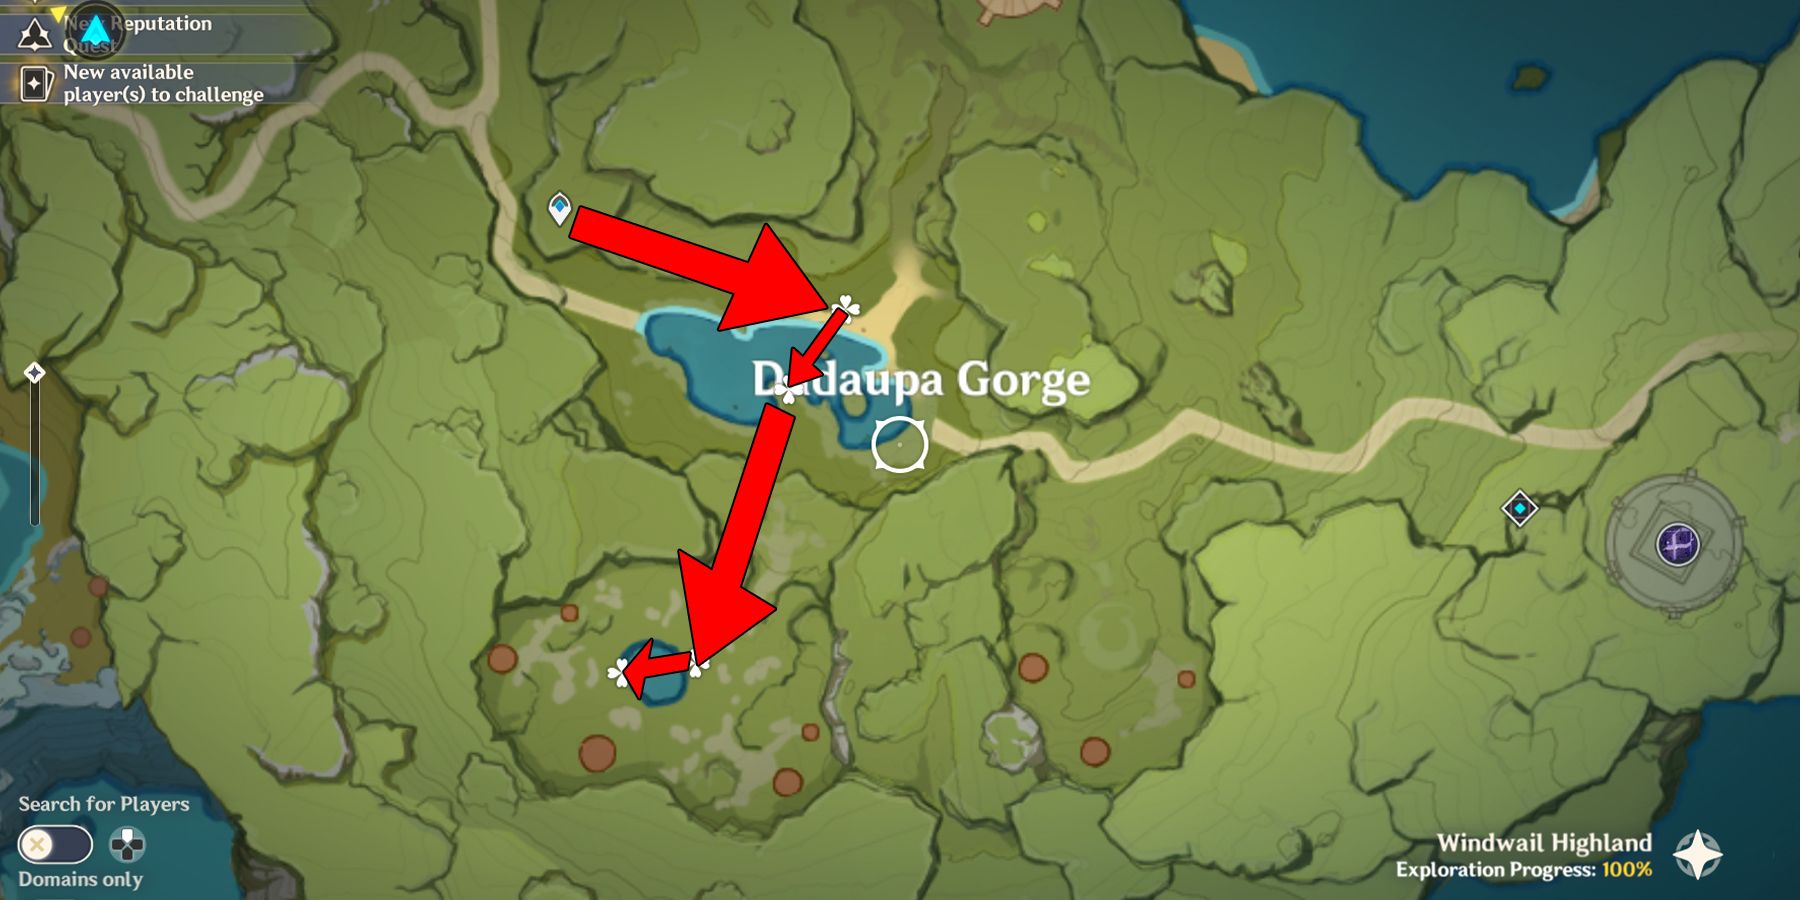 genshin impact dadaupa gorge calla lily locations